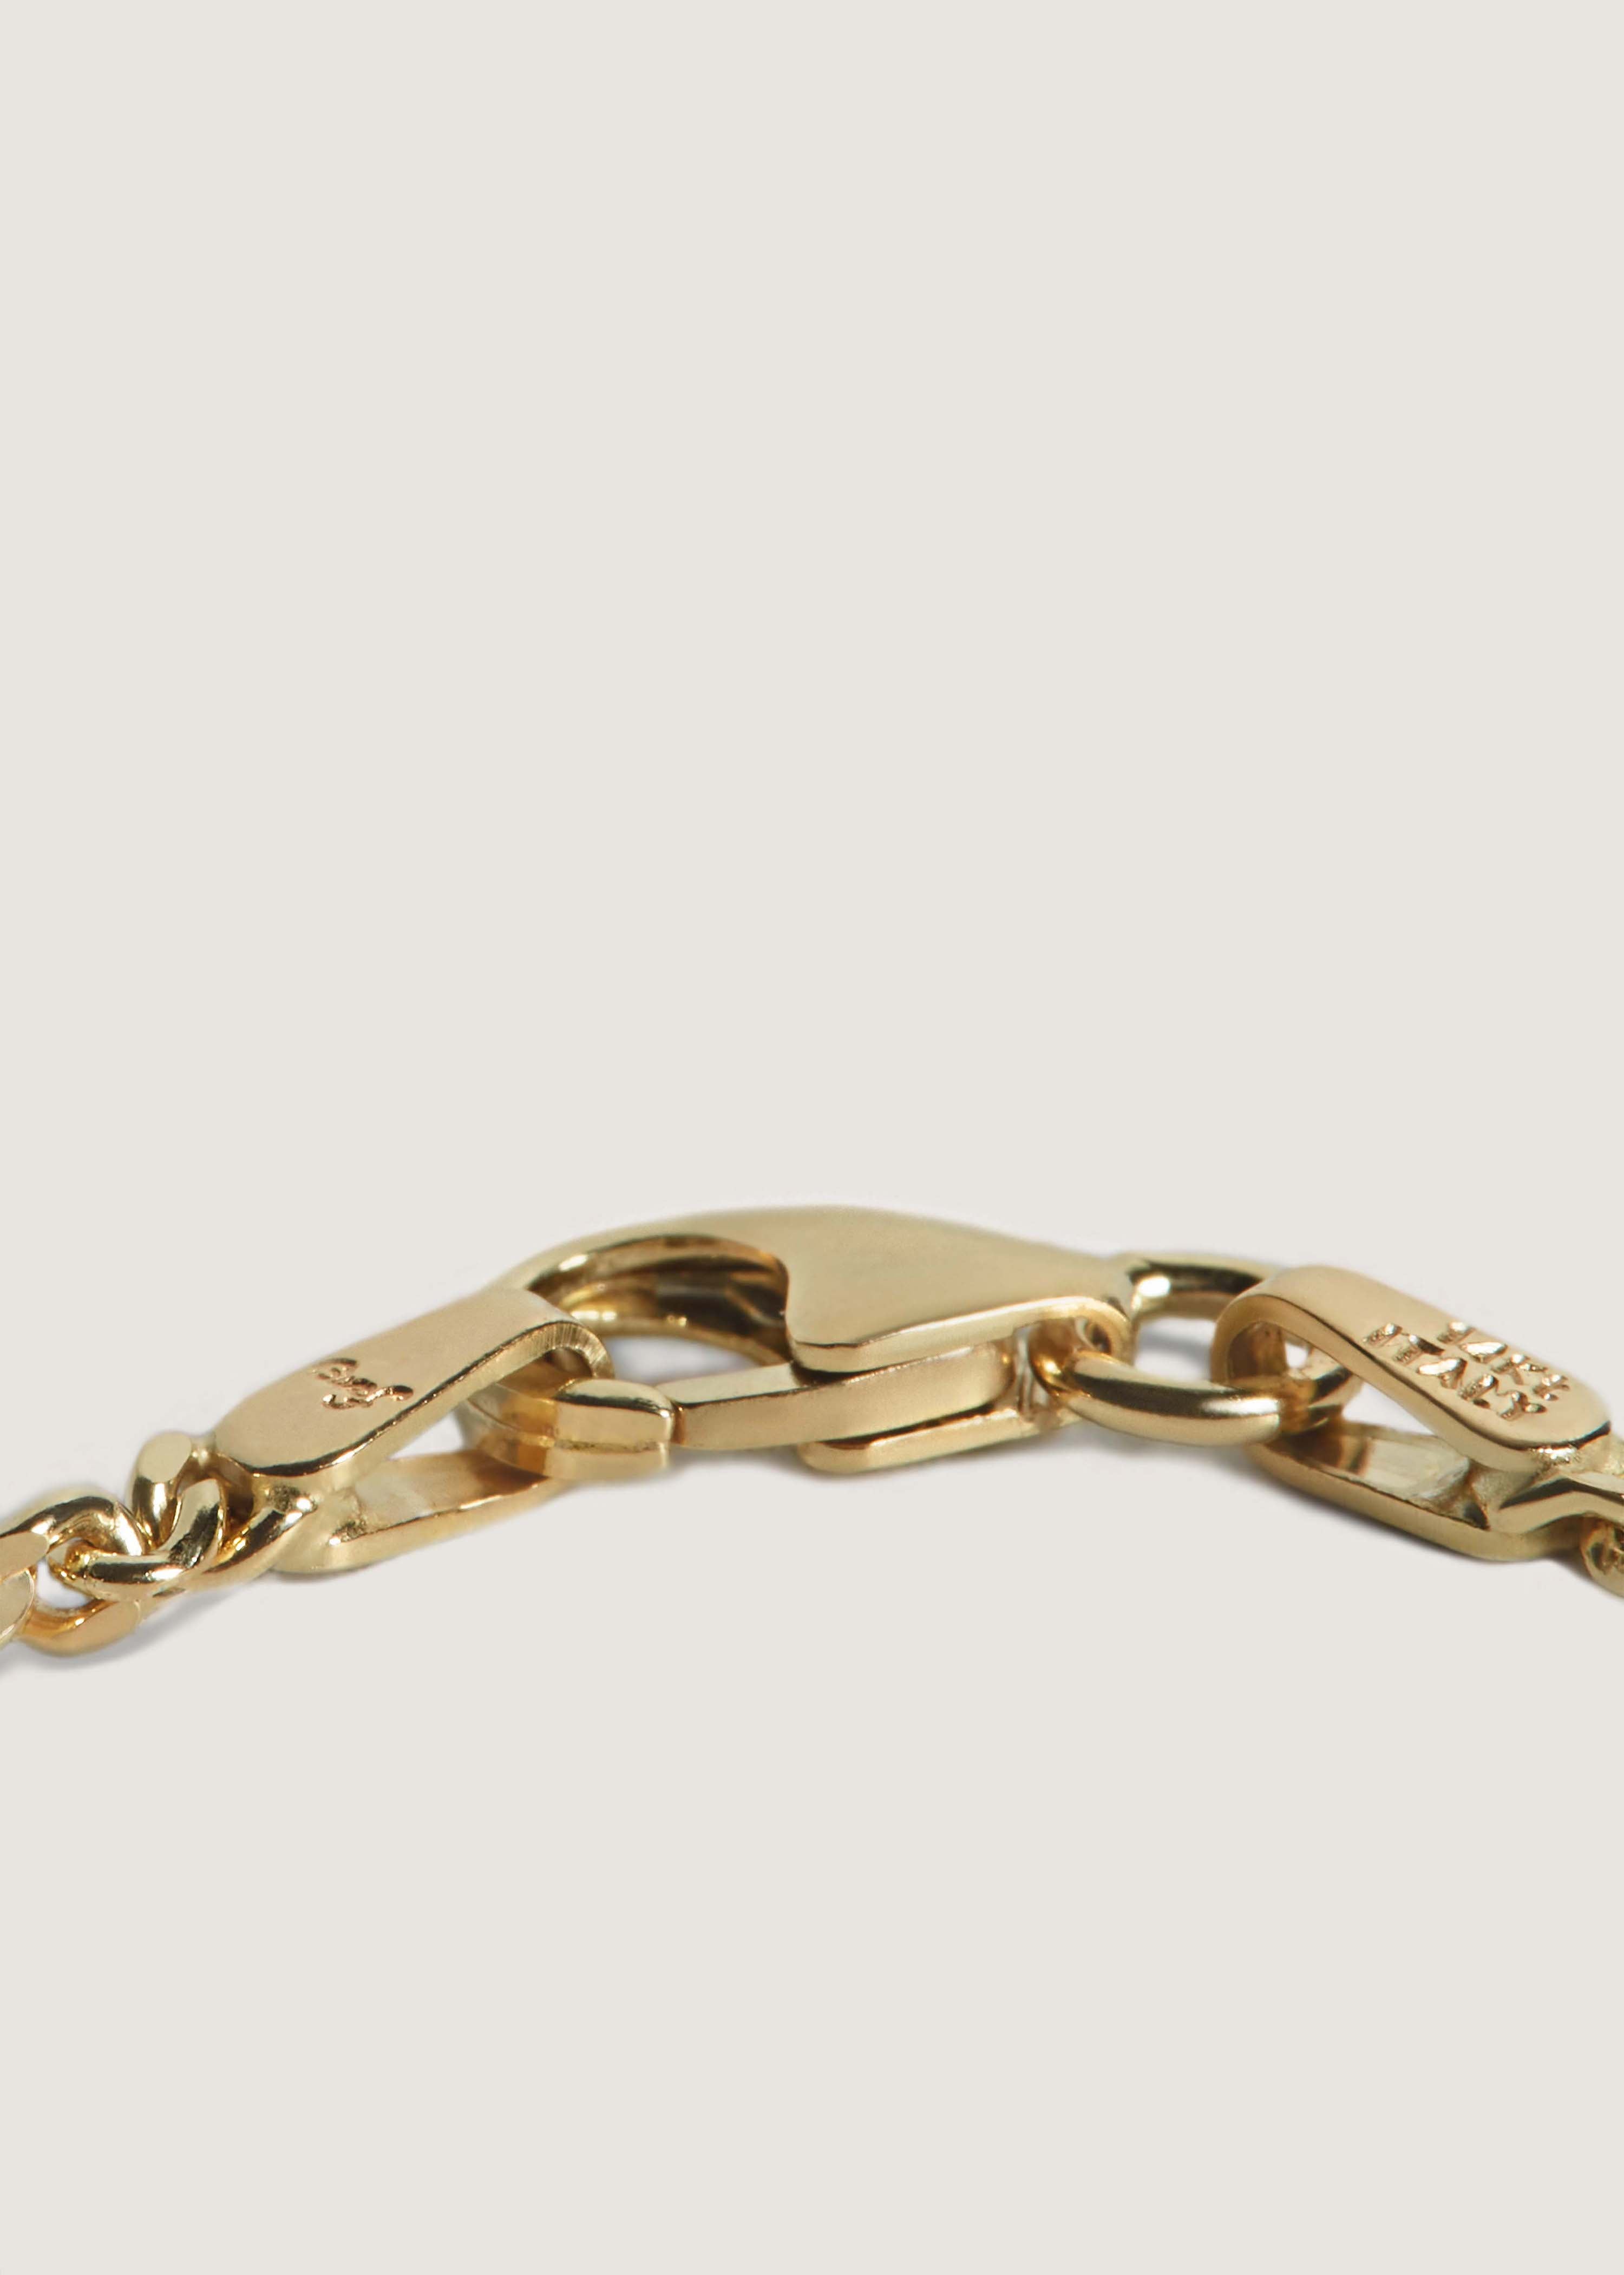 alt="close up of clasp Petite Capri Curb Chain Necklace"